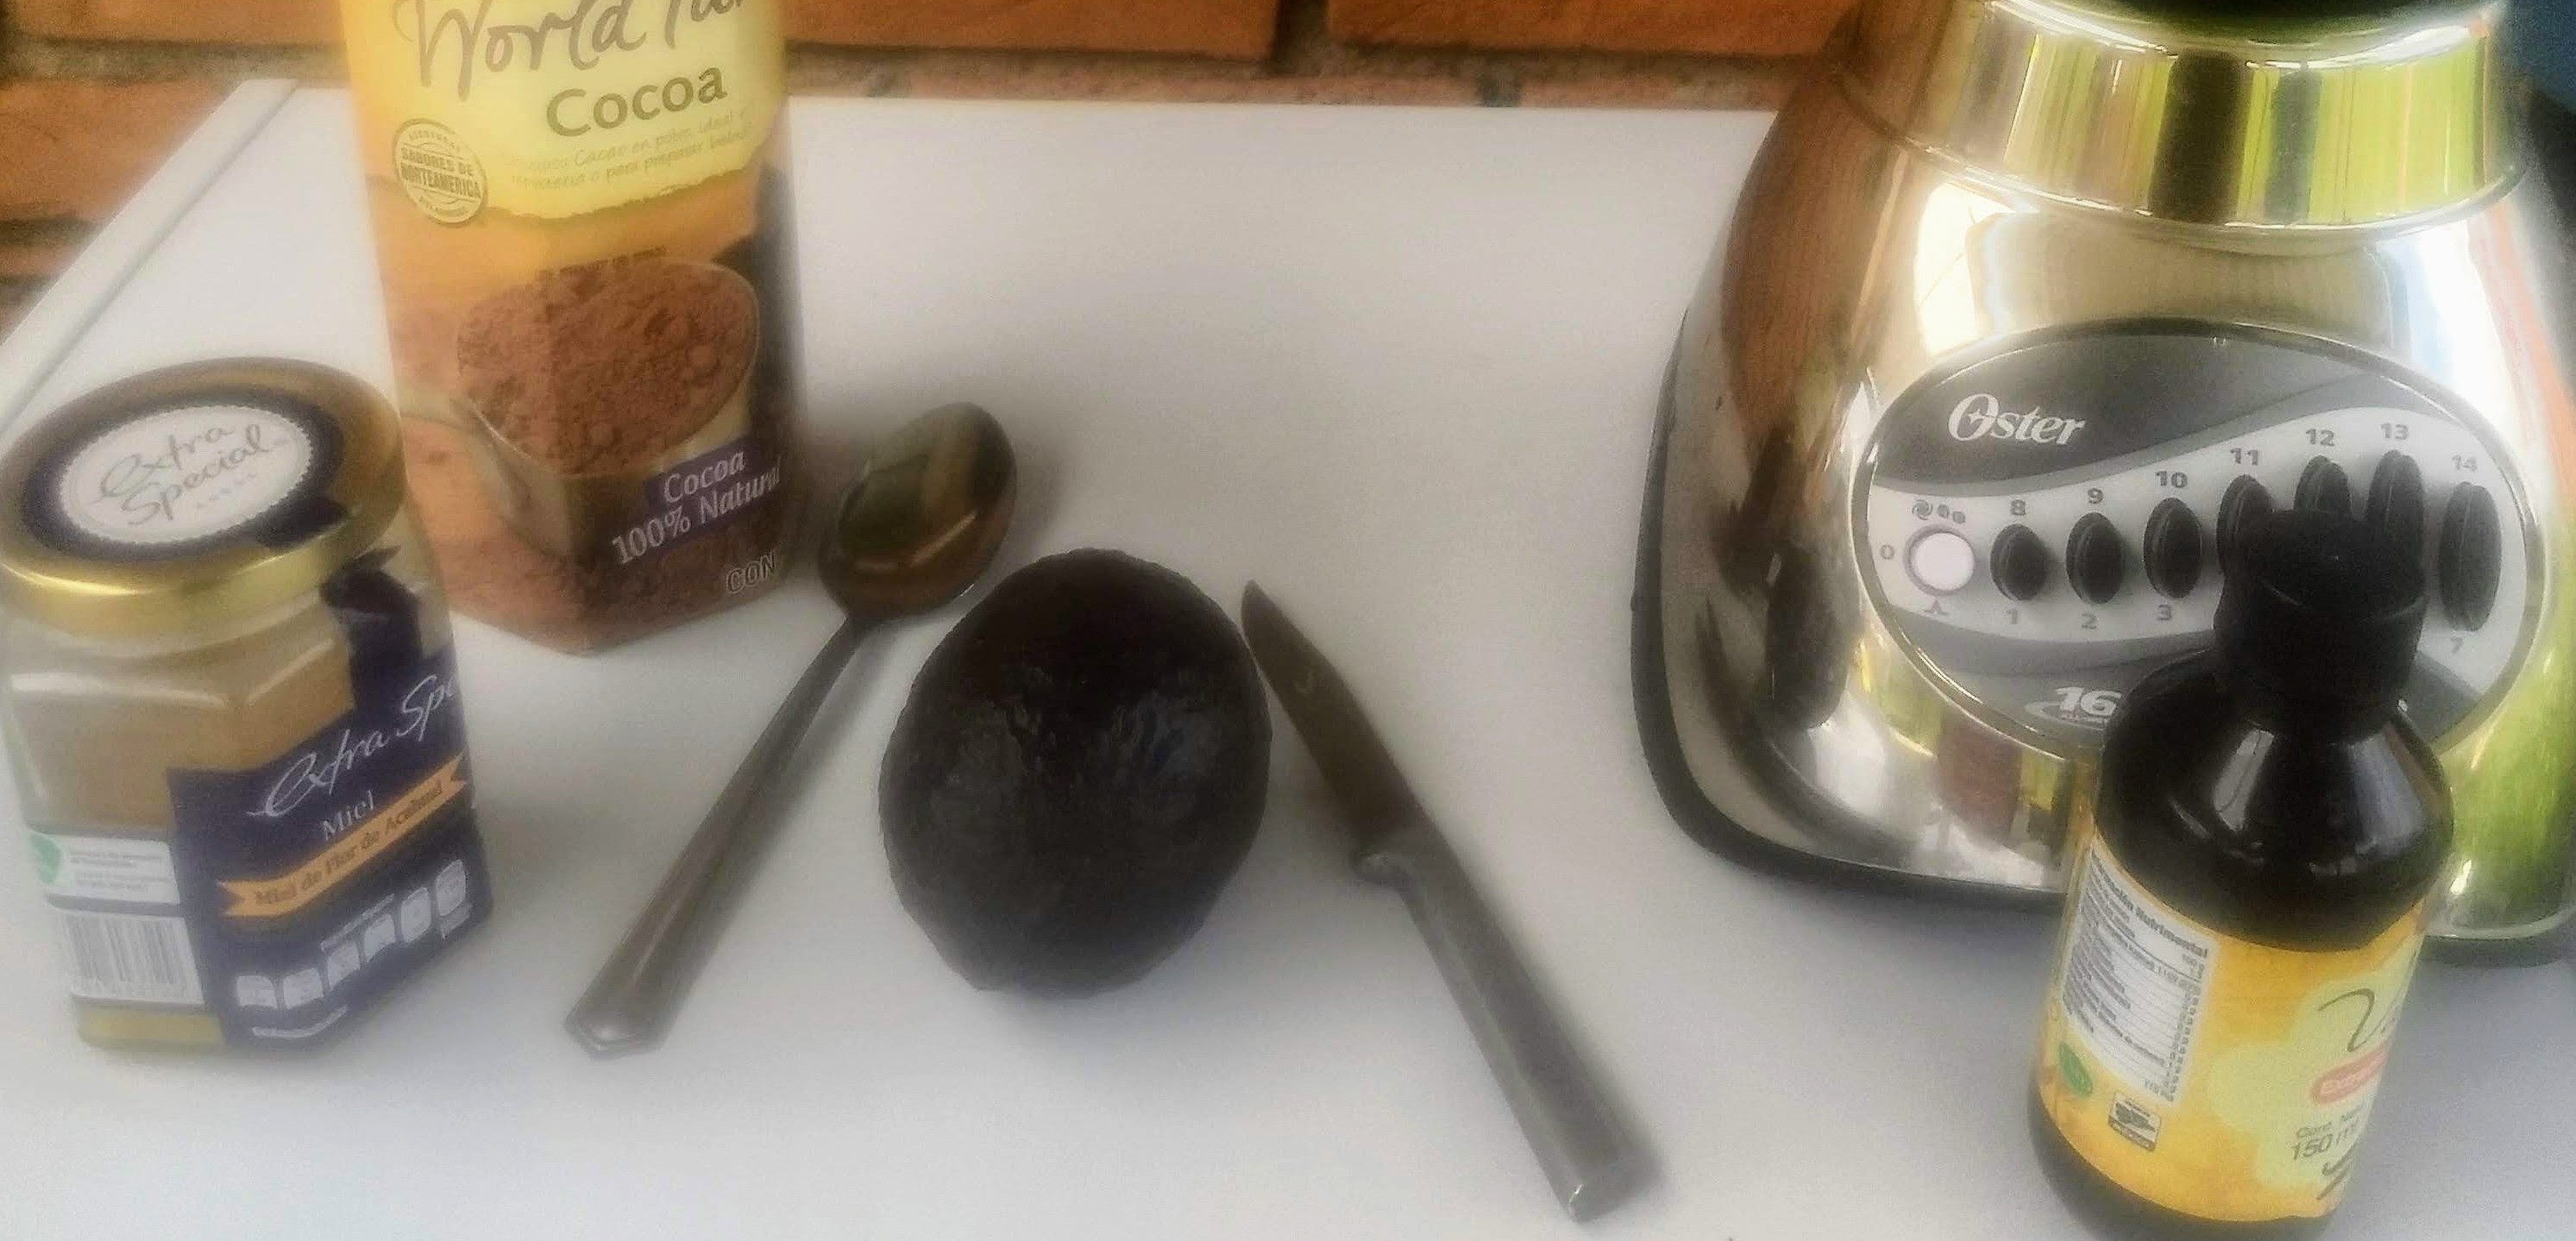 Chocolate avocado mousse